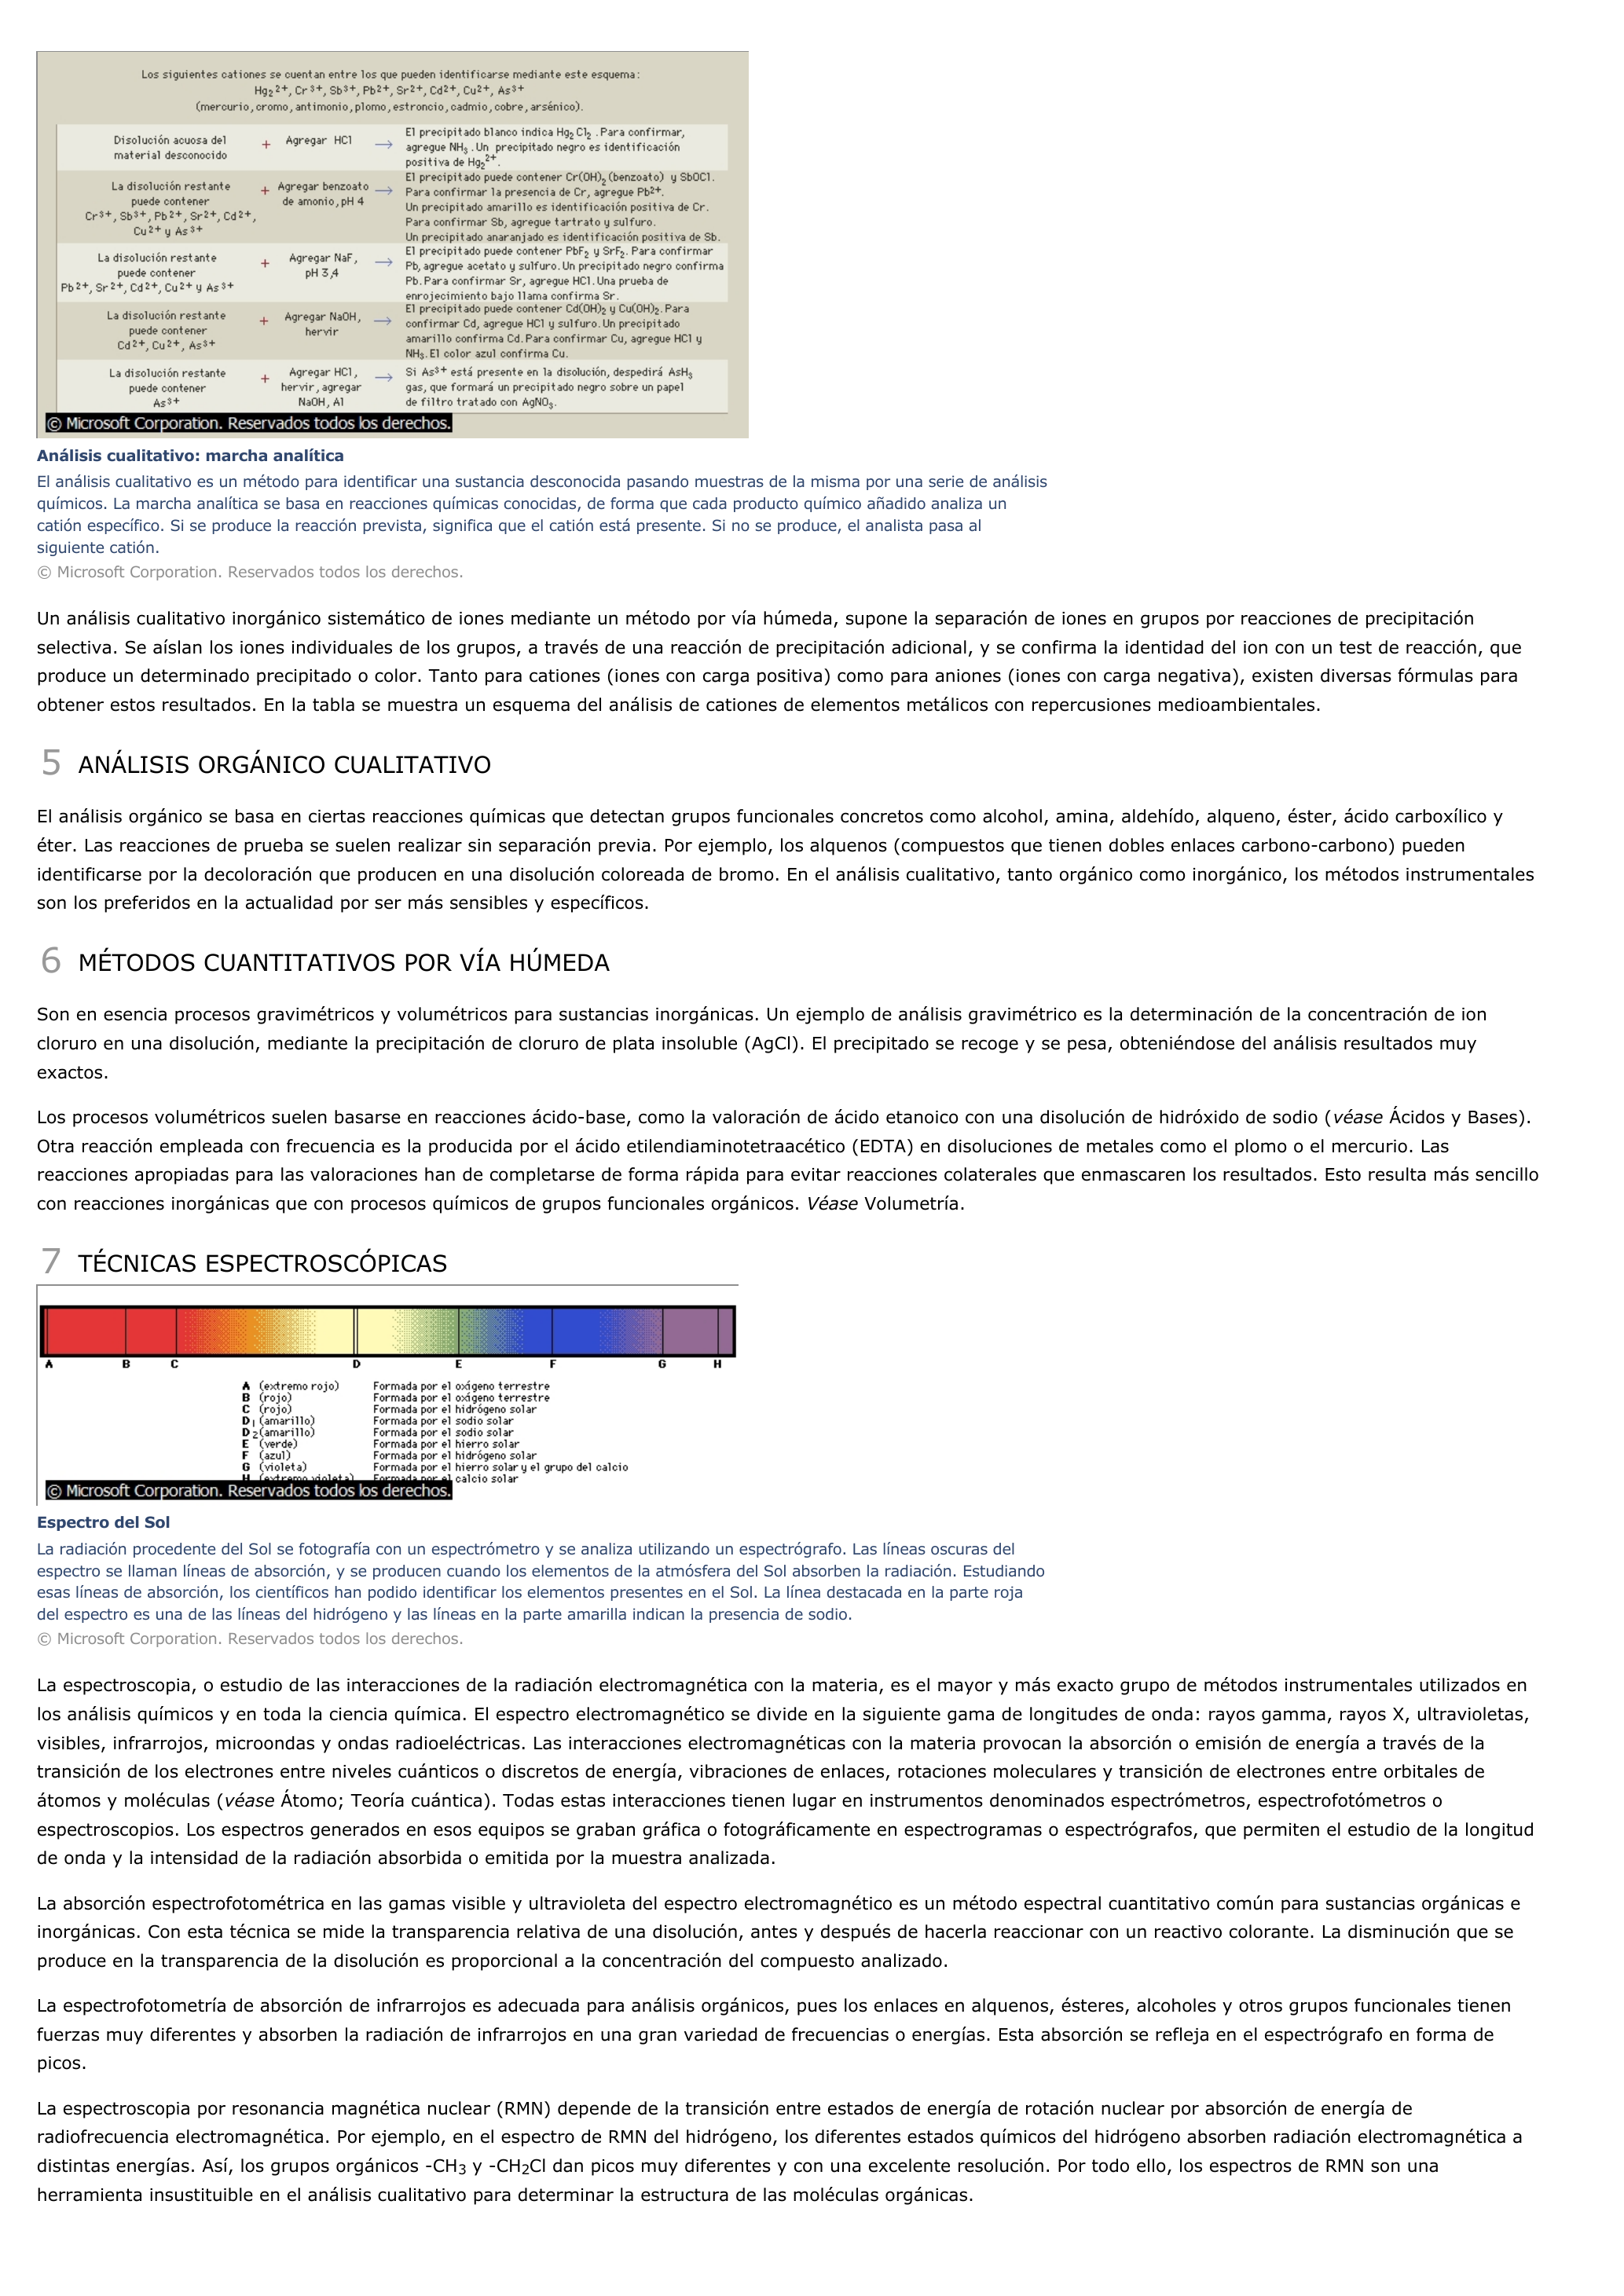 Prévisualisation du document Análisis químico - ciencia y tecnologia.